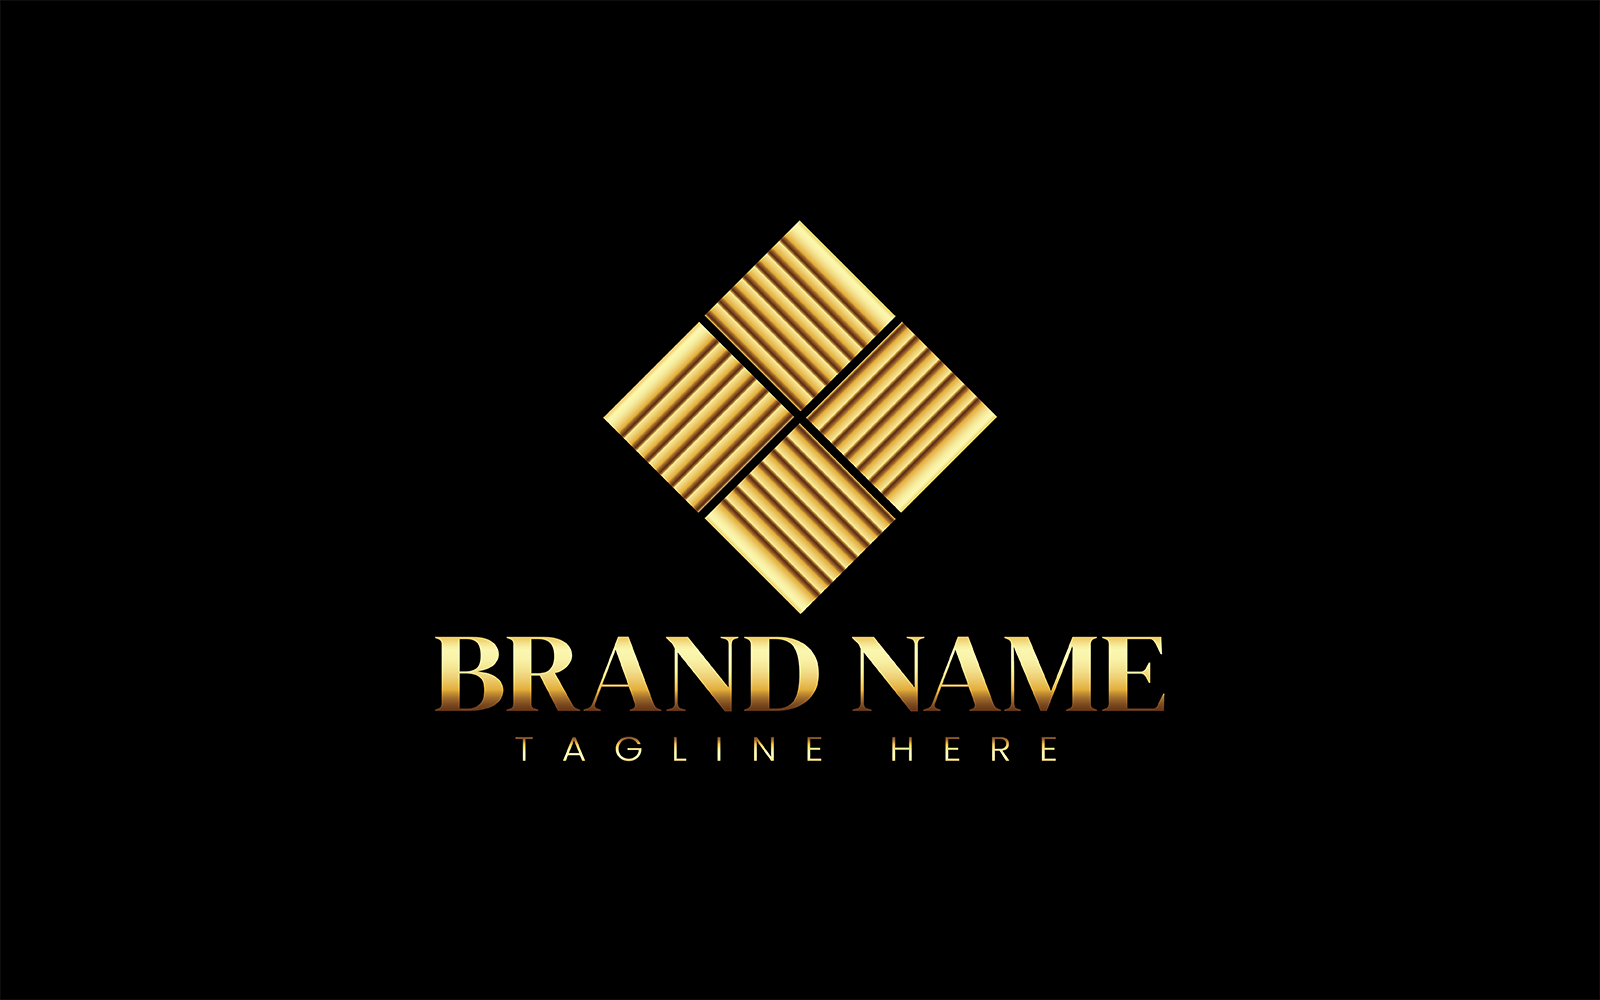 Luxury company. Лакшери компании. Abstract brand logos. Company logo 800x500.